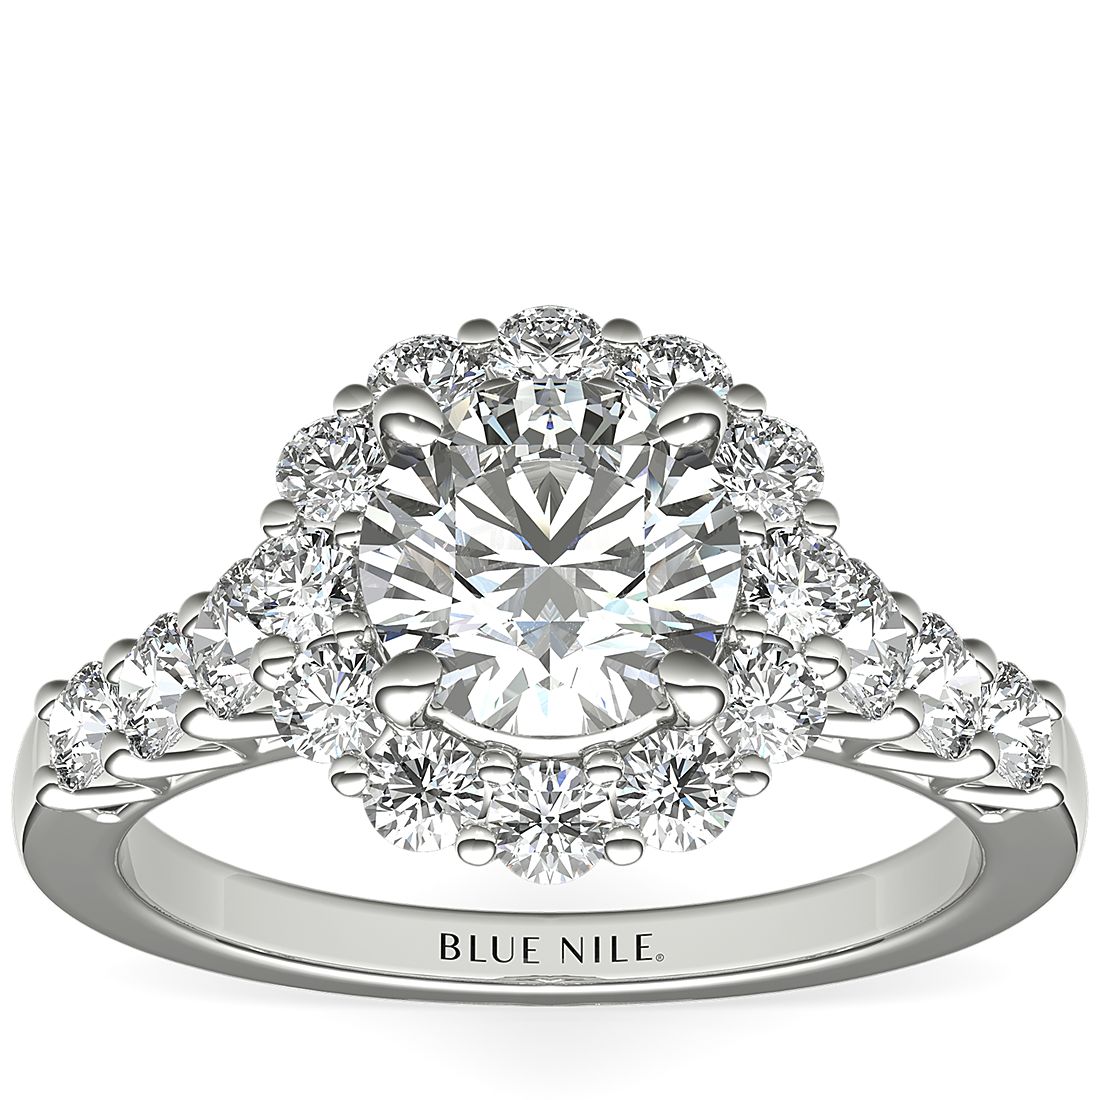 Royal Crown Halo Diamond Engagement Ring in Platinum